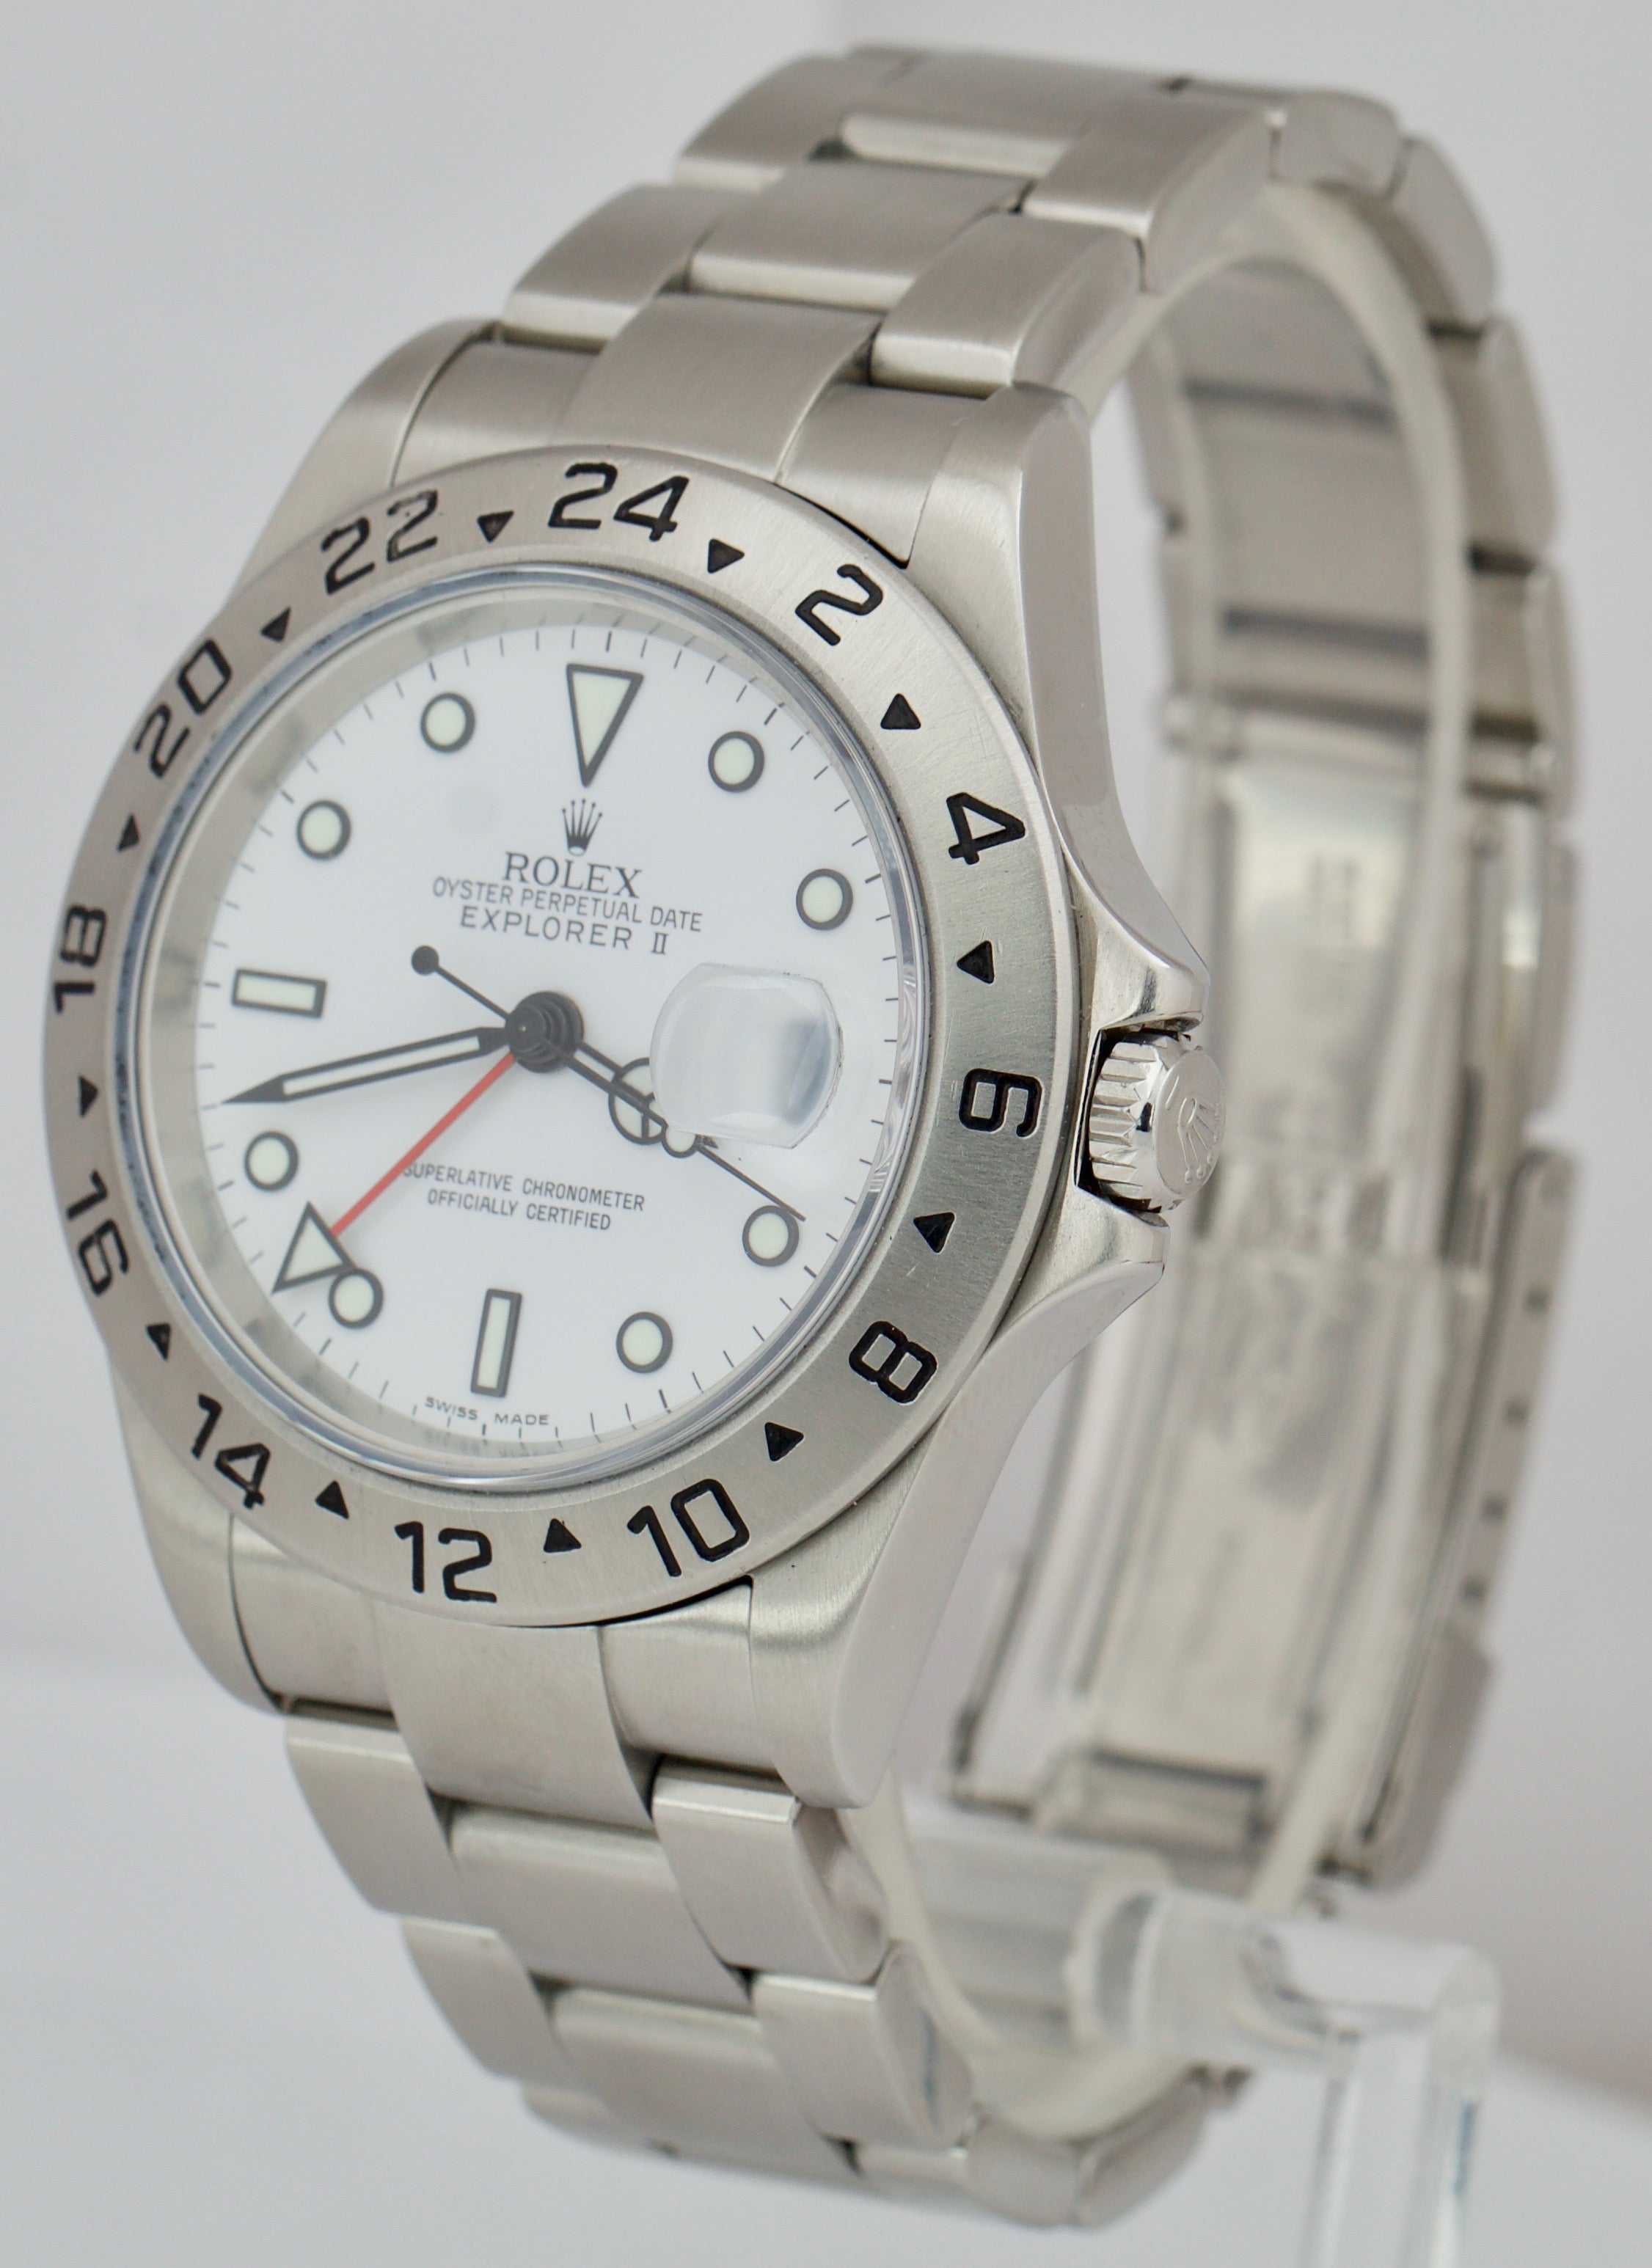 2007 Rolex Explorer II NO-HOLES Polar White GMT Stainless 40mm 16570 T Watch